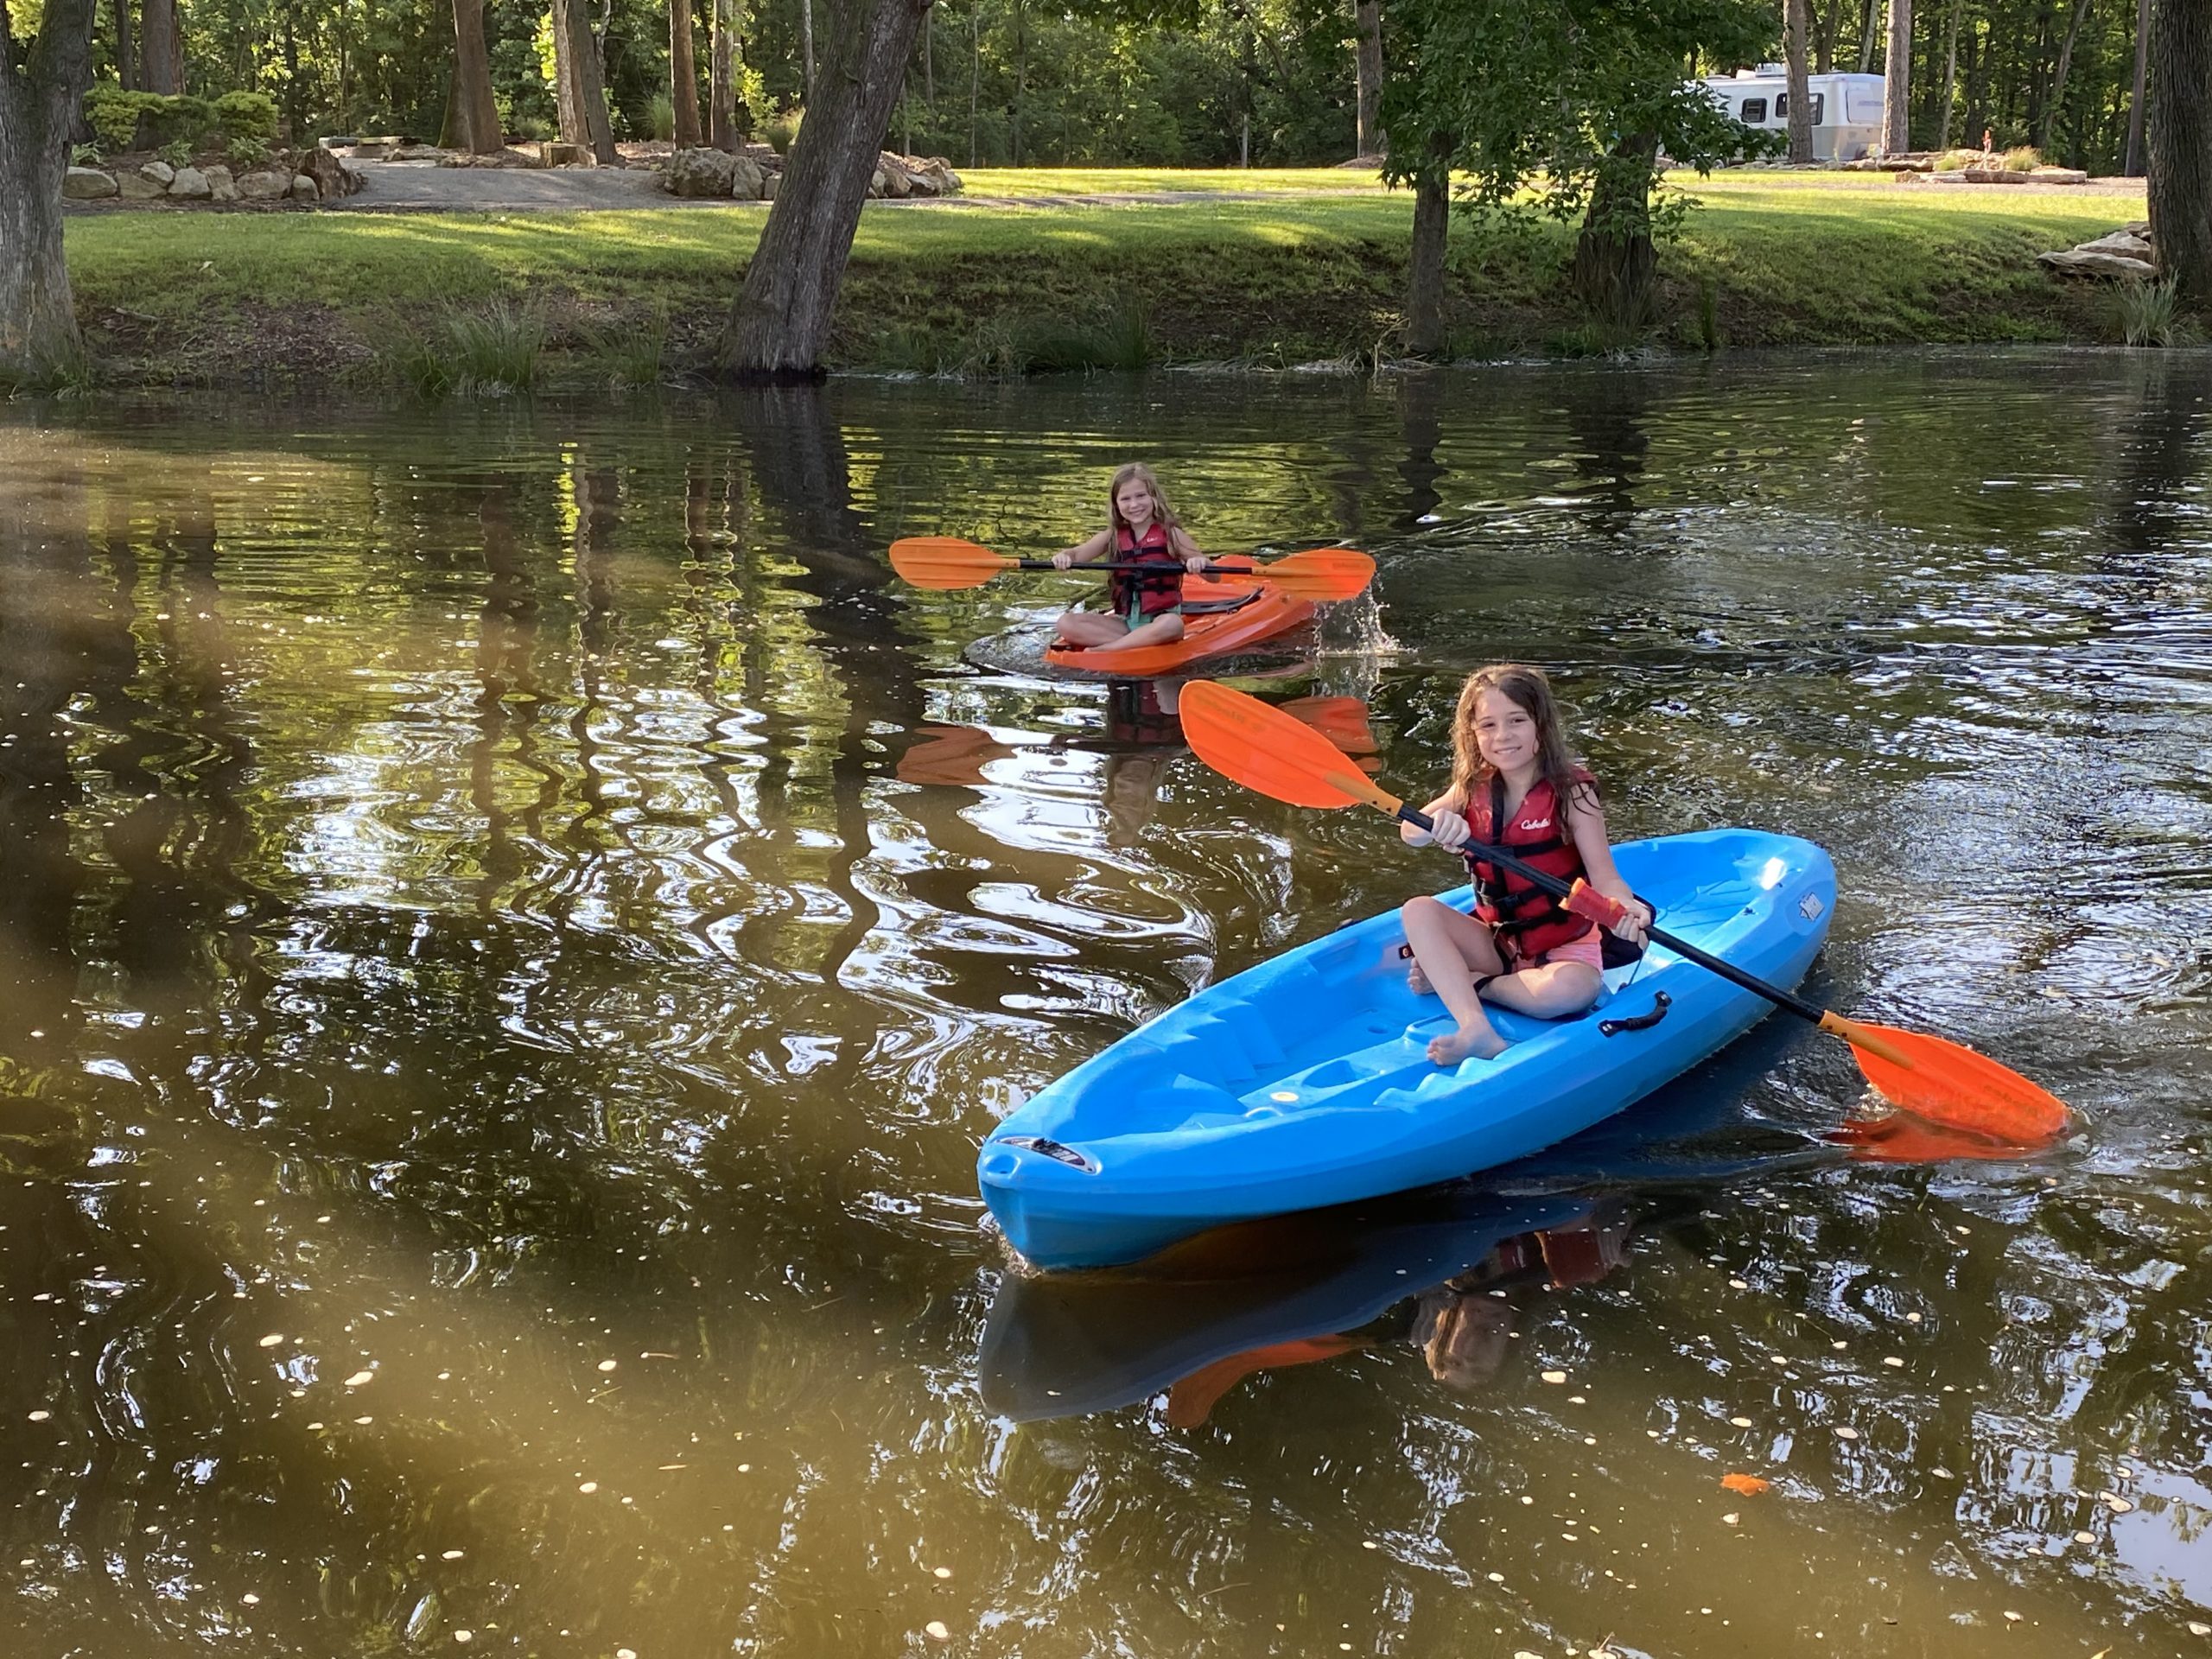 Kayak, Canoe, Boat Rentals near Louisville - Louisville ...